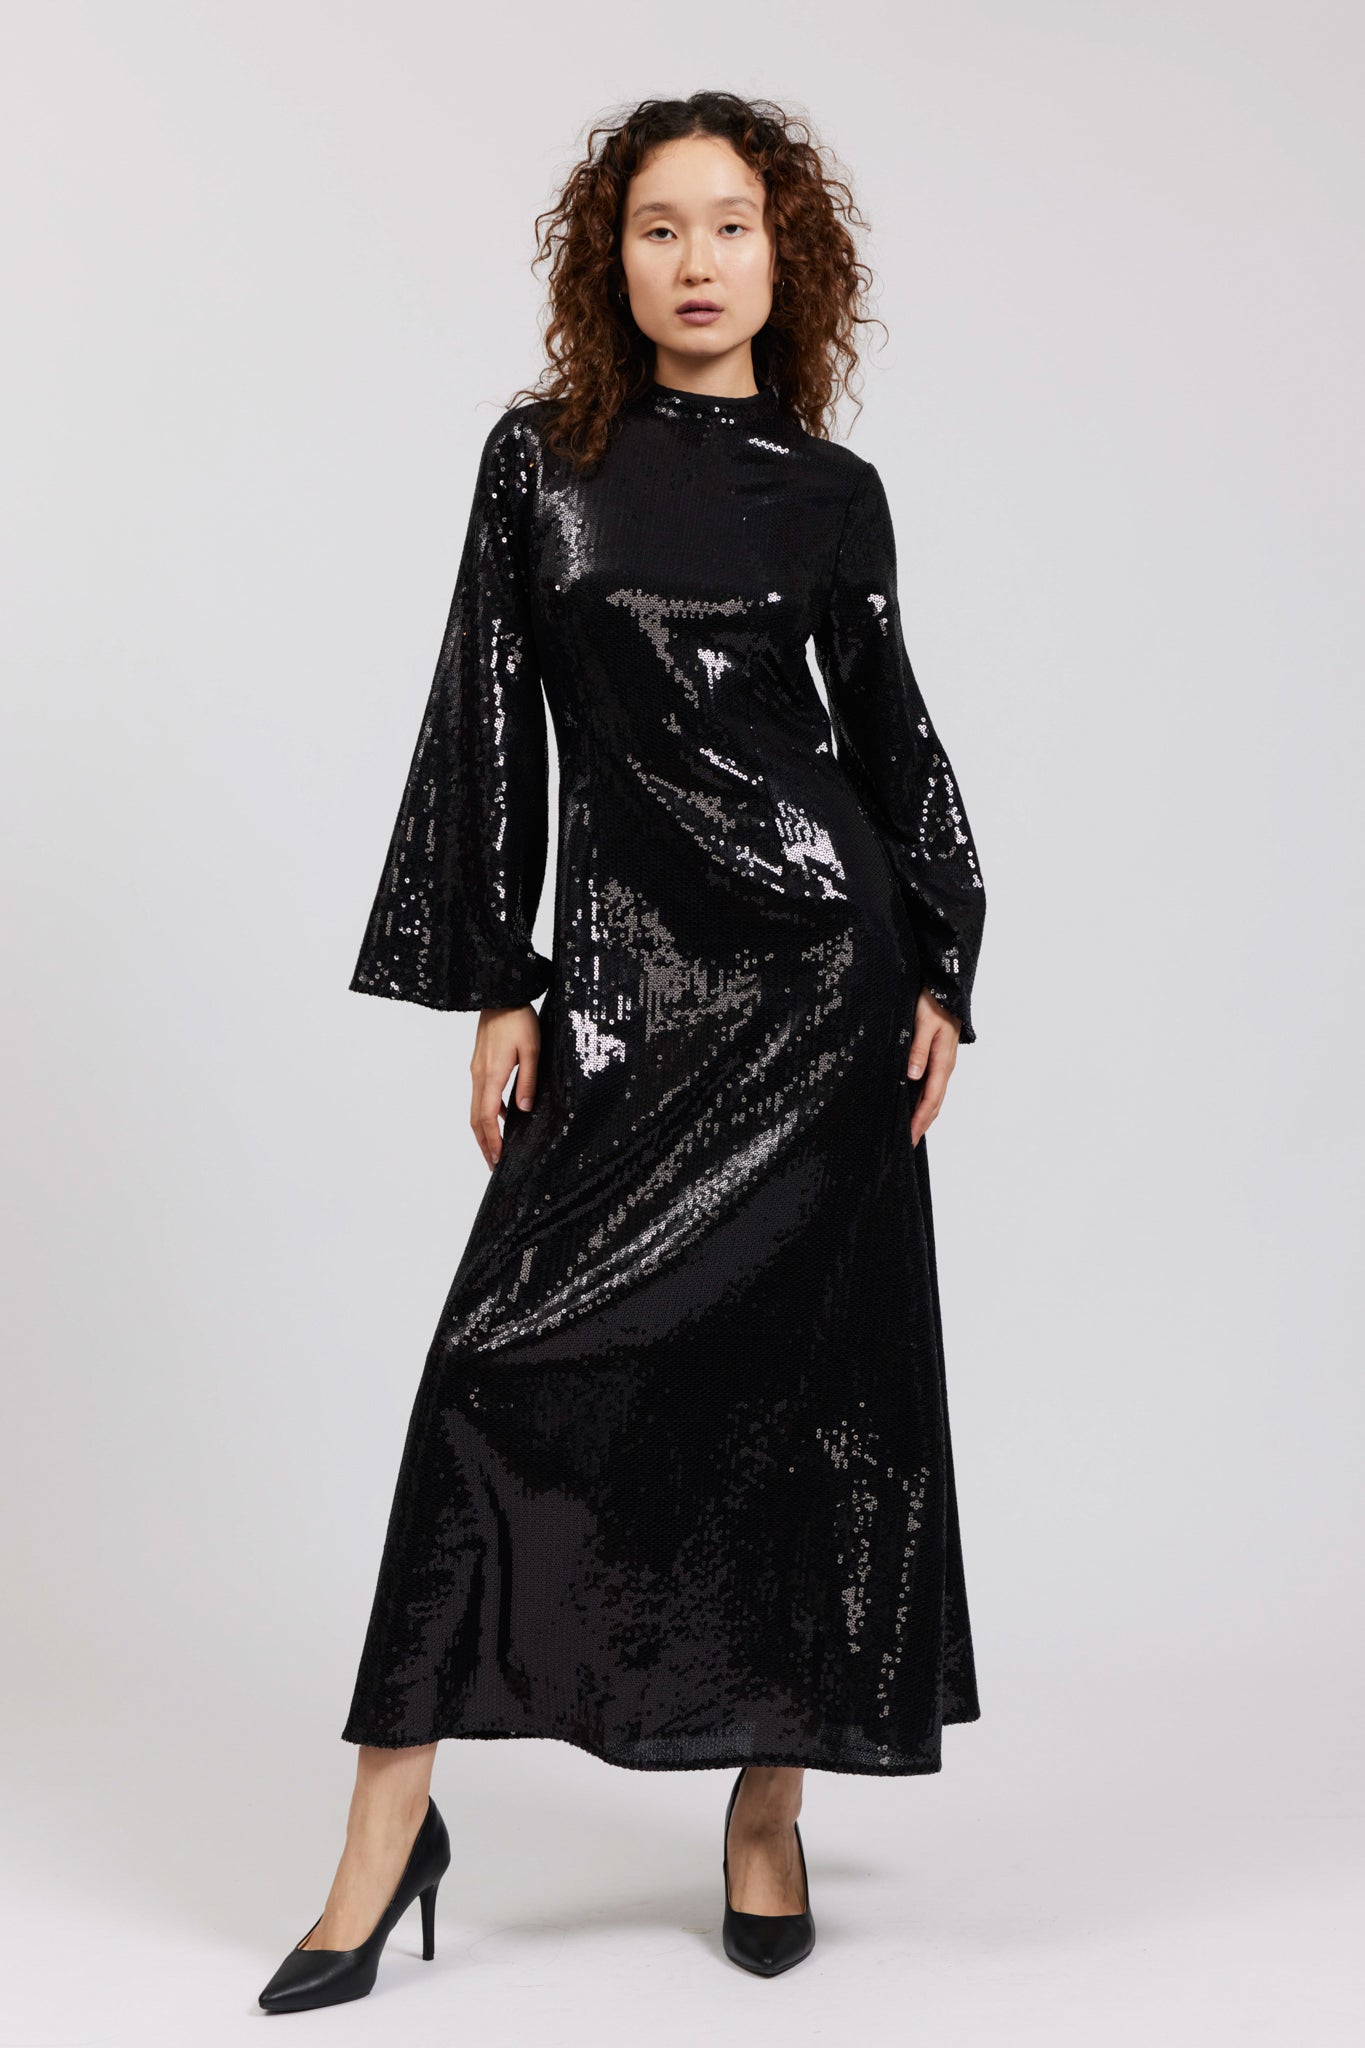 Dolly Dress in Black Sequin